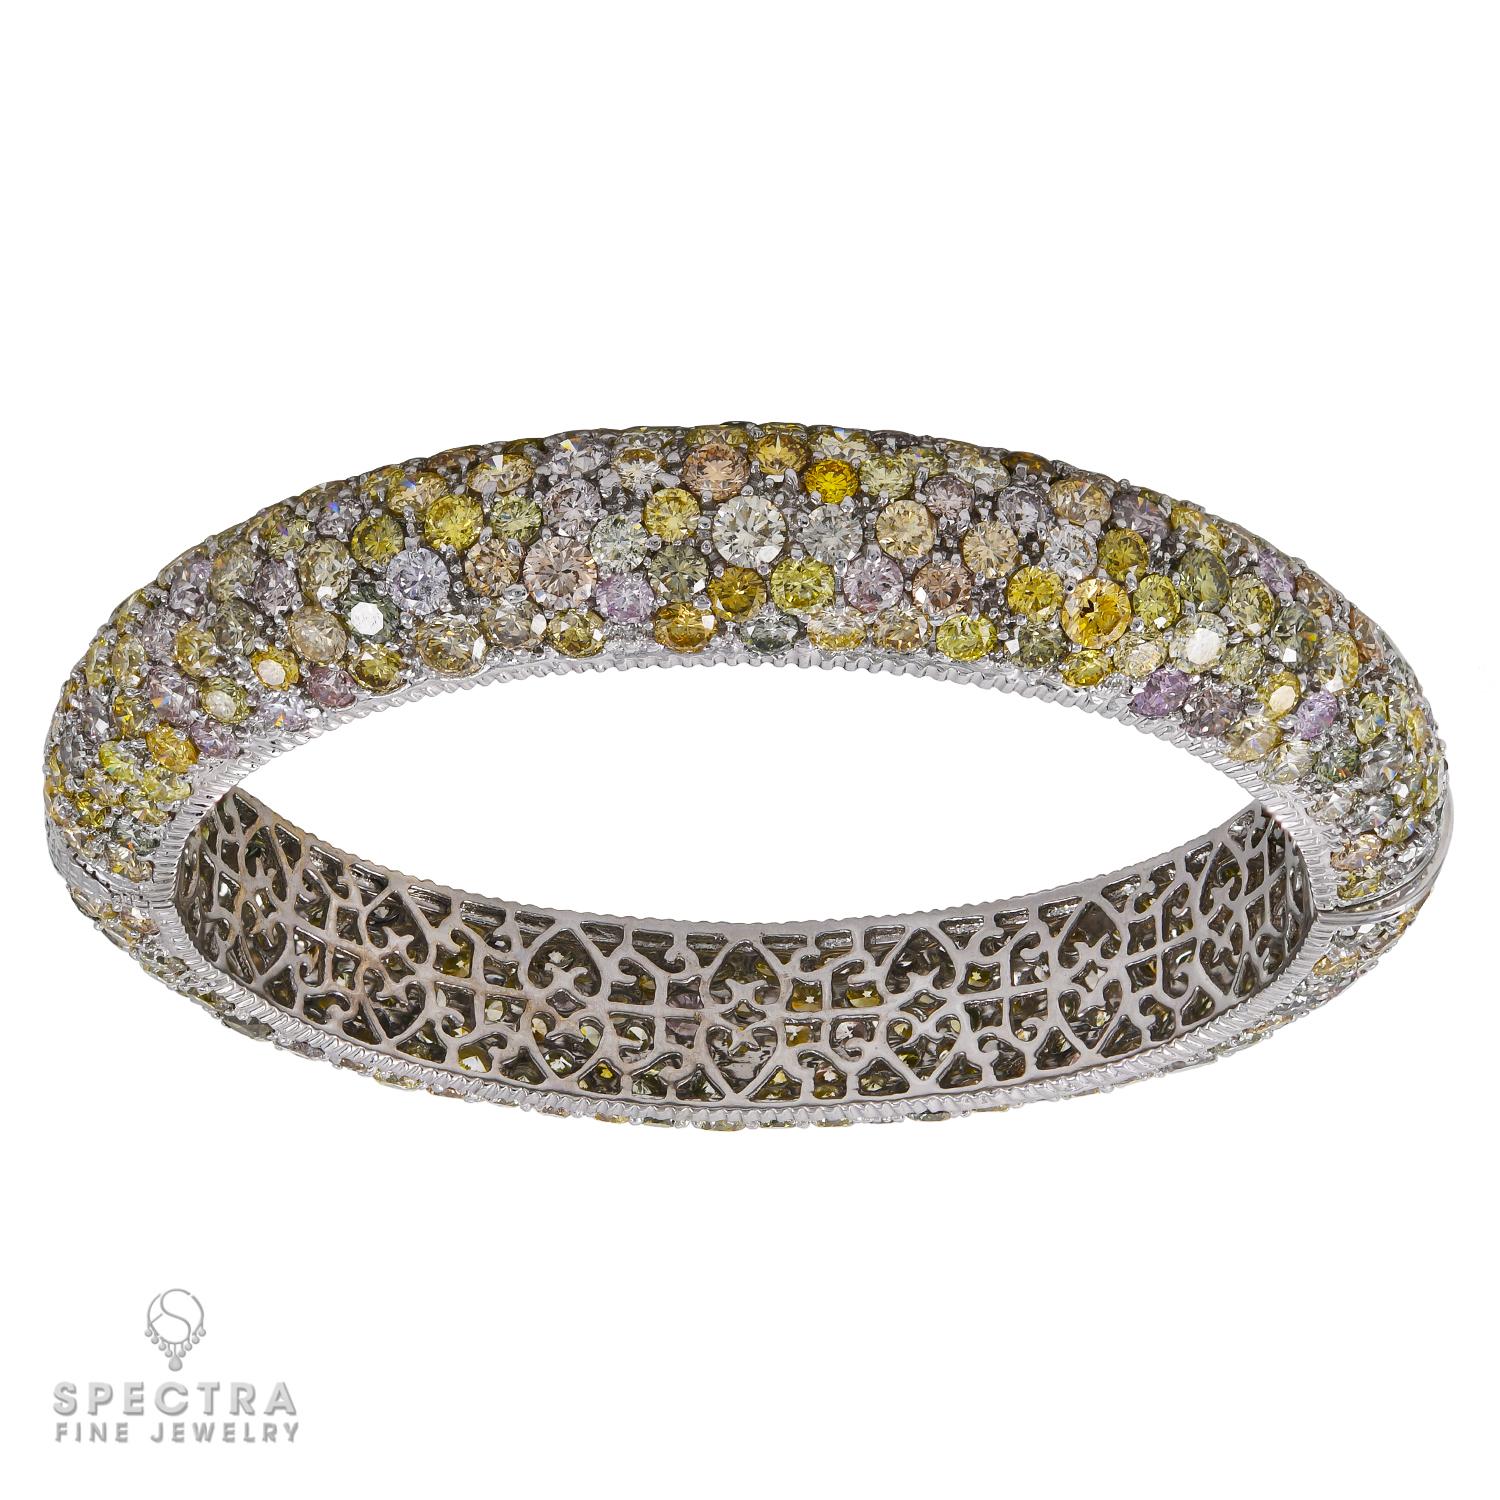 Round Cut Spectra Fine Jewelry Multicolored Diamond 18k White Gold Bracelet